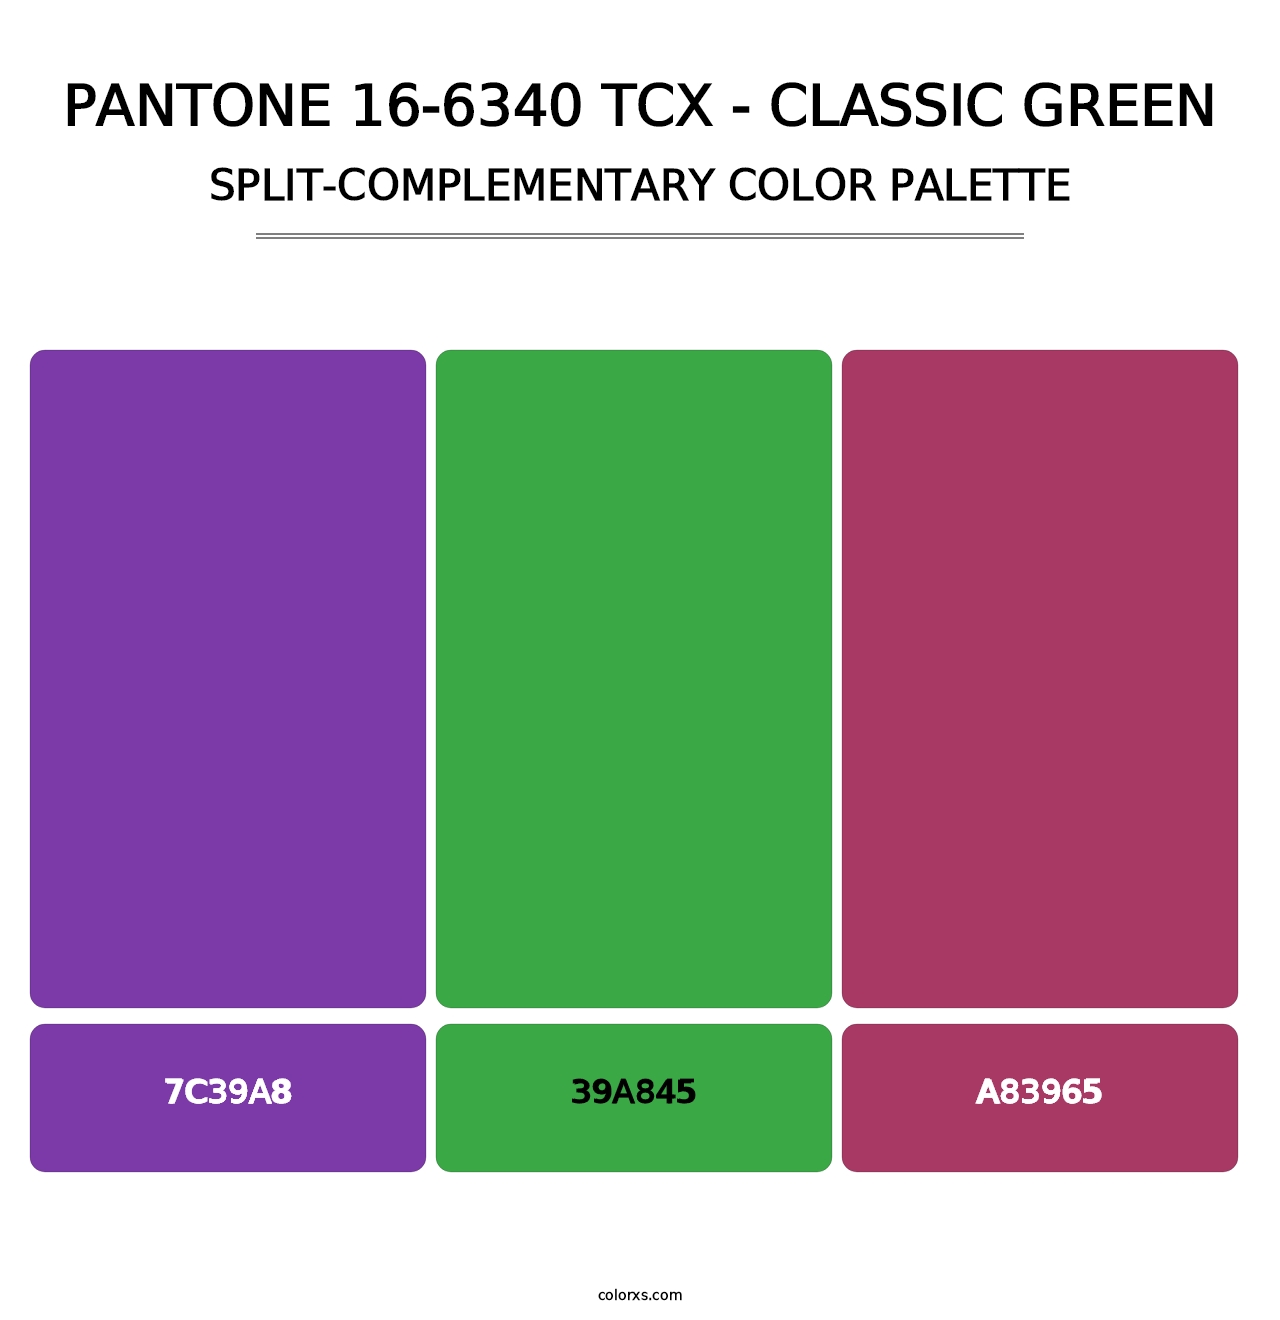 PANTONE 16-6340 TCX - Classic Green - Split-Complementary Color Palette